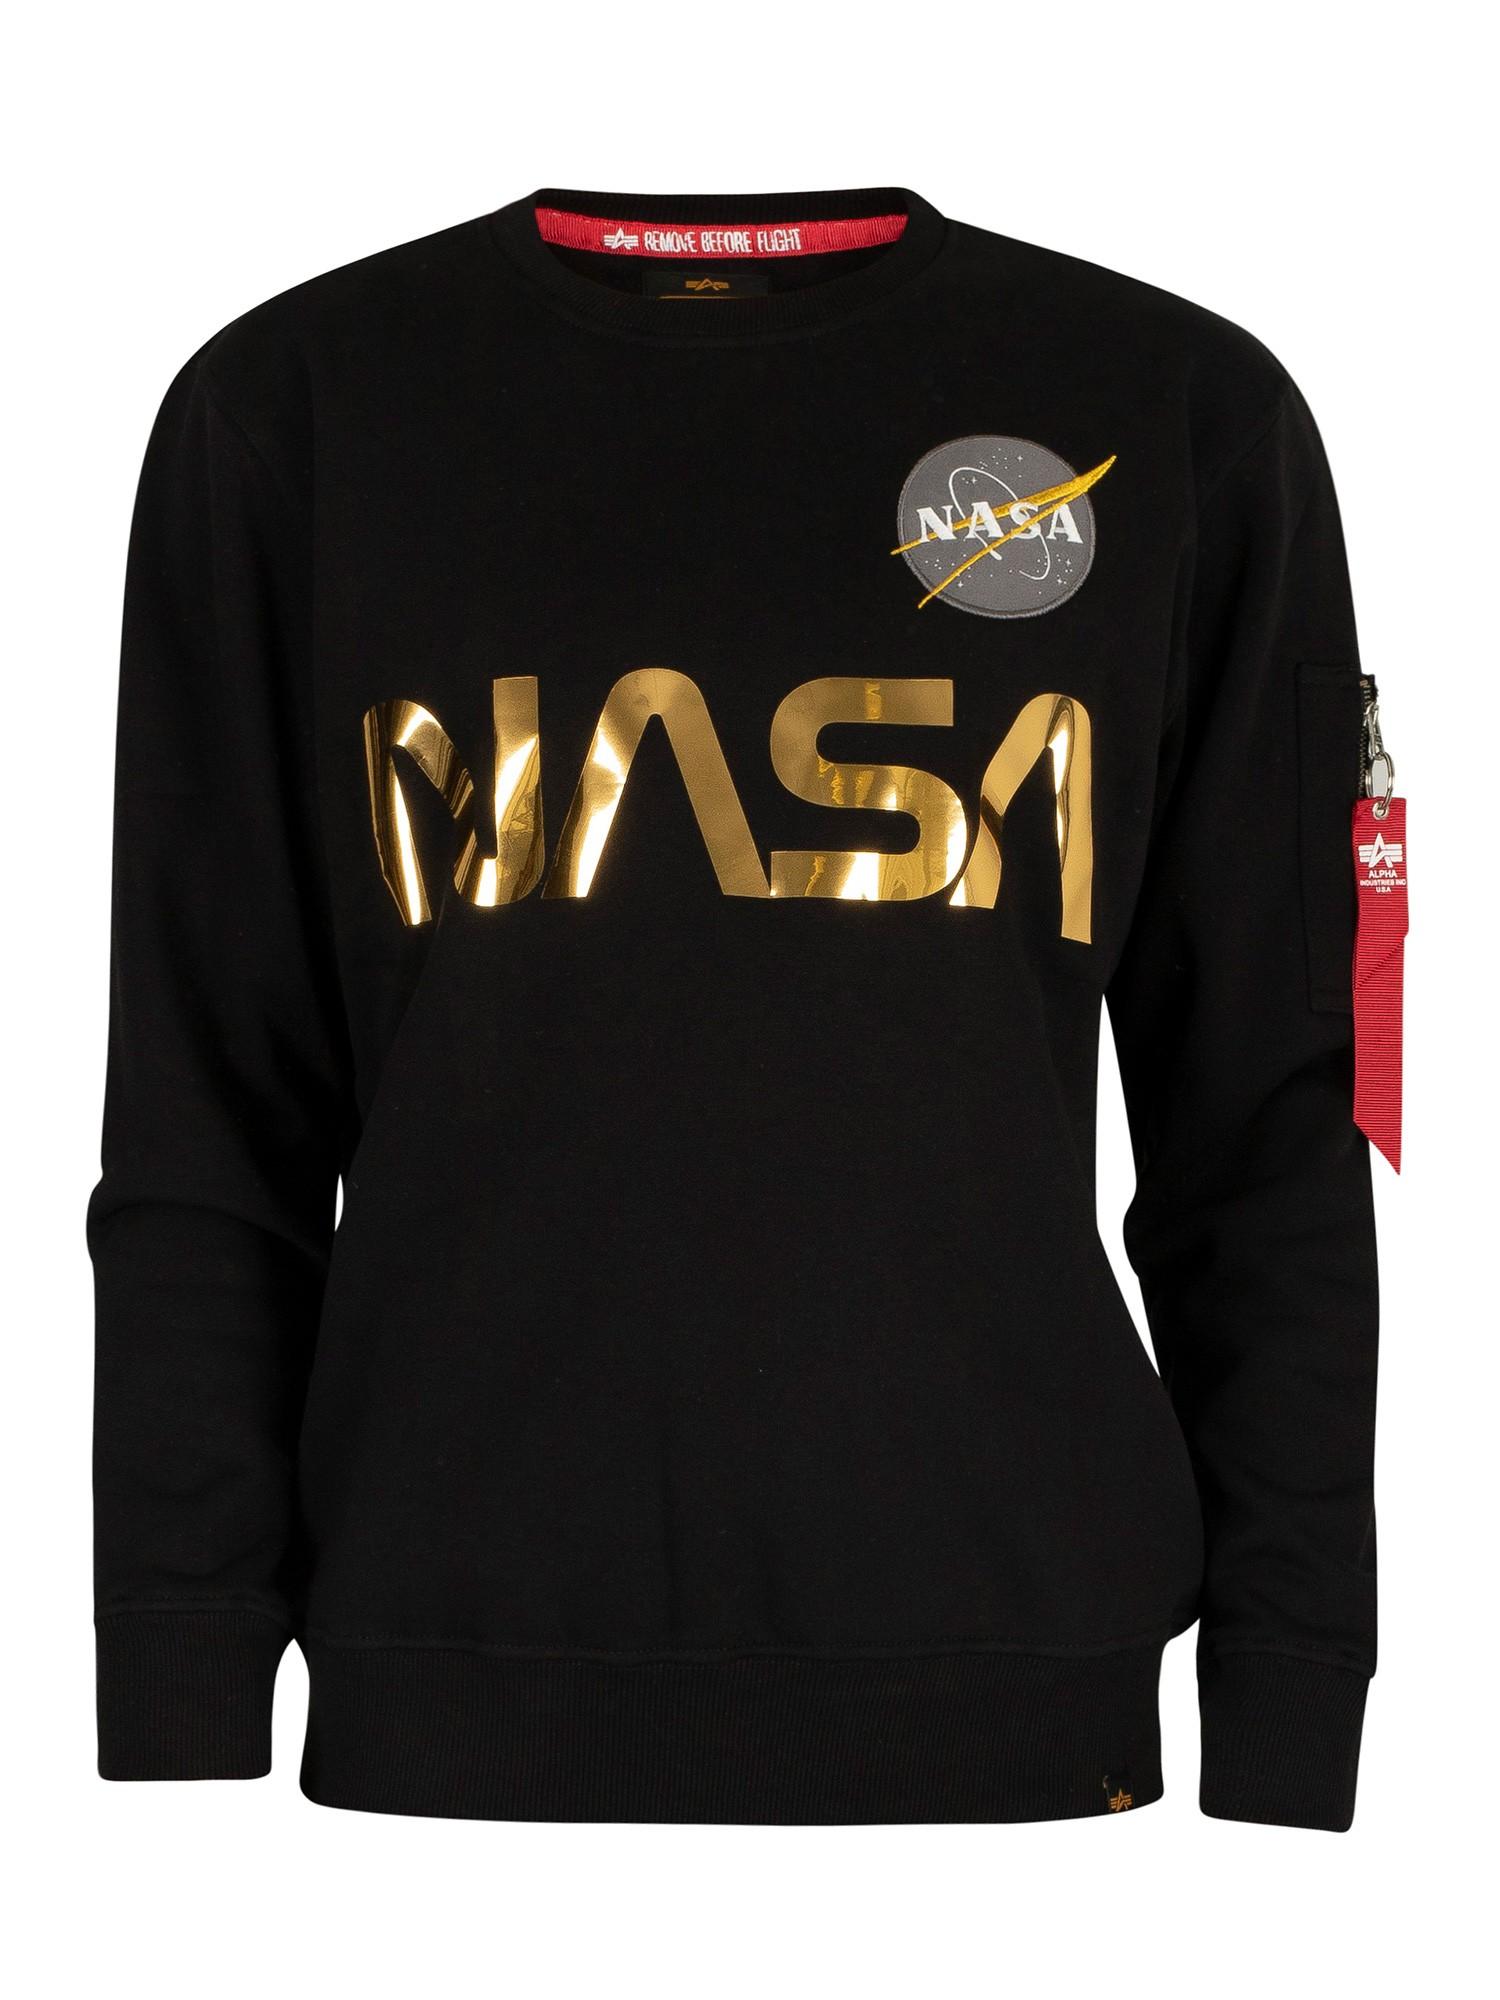 Alpha Industries NASA Reflective Sweater In Black